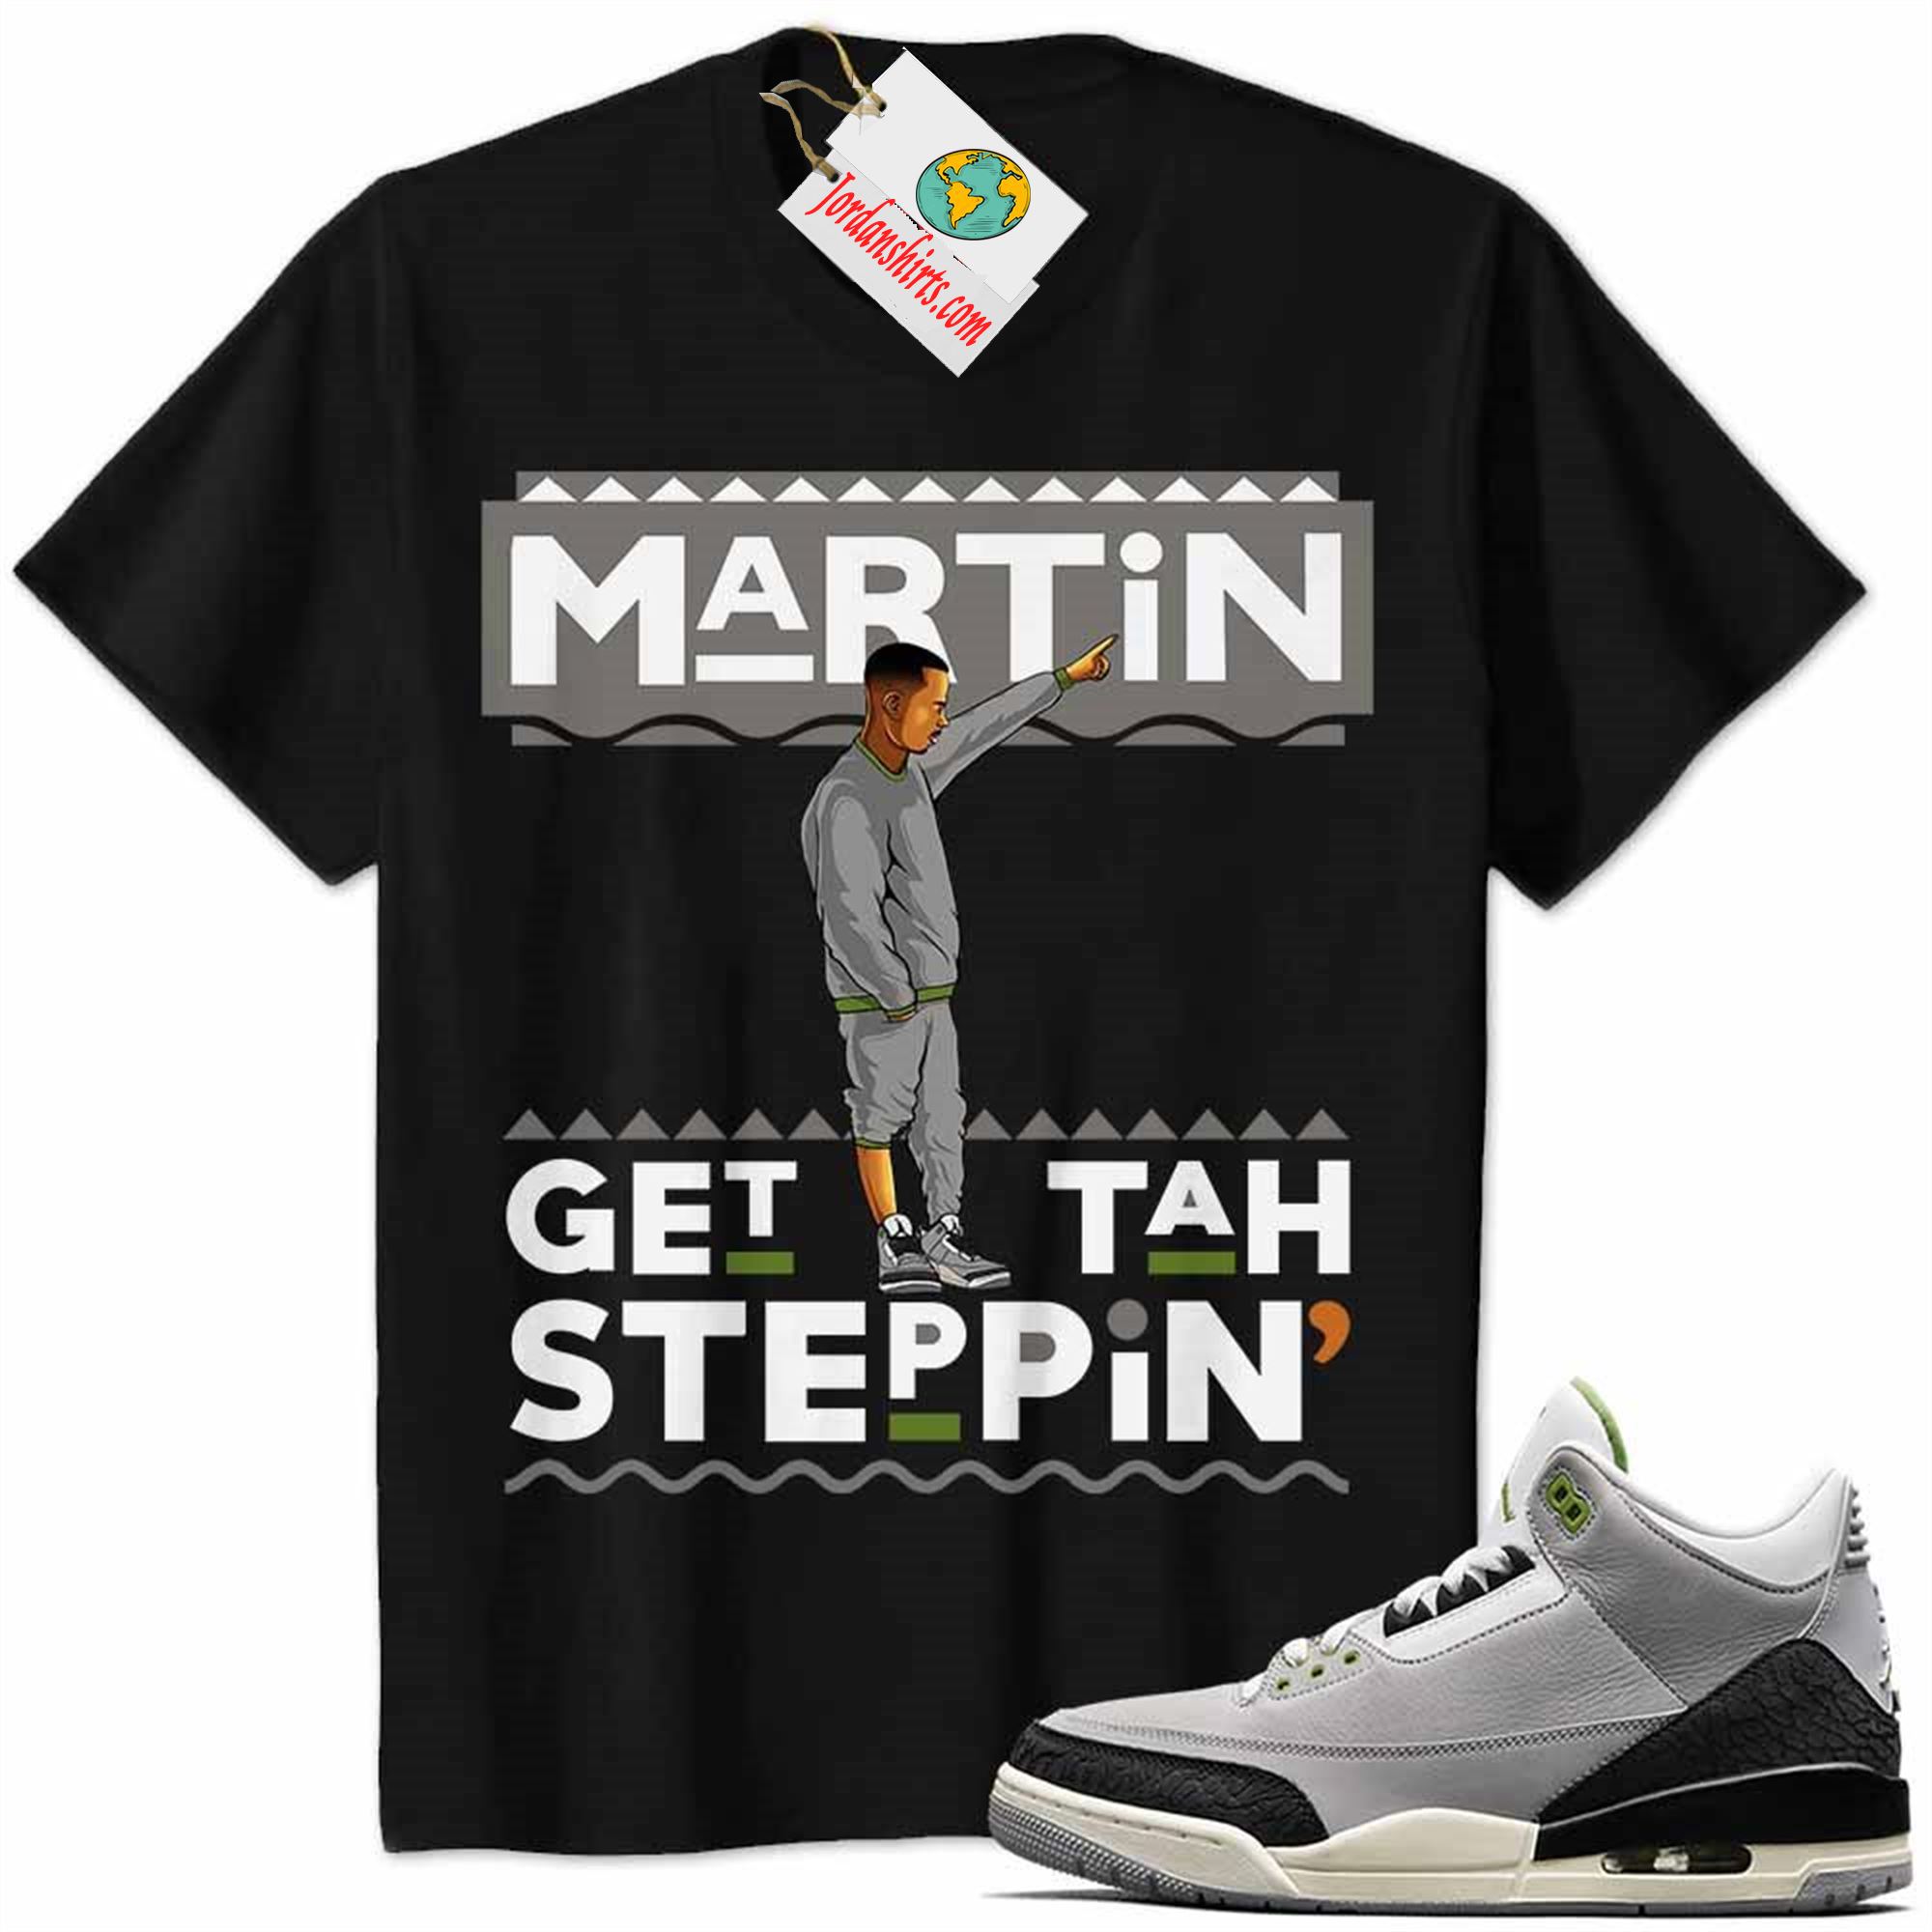 Jordan 3 Shirt, Jordan 3 Chlorophyll Shirt Martin Get Tah Steppin Black Plus Size Up To 5xl